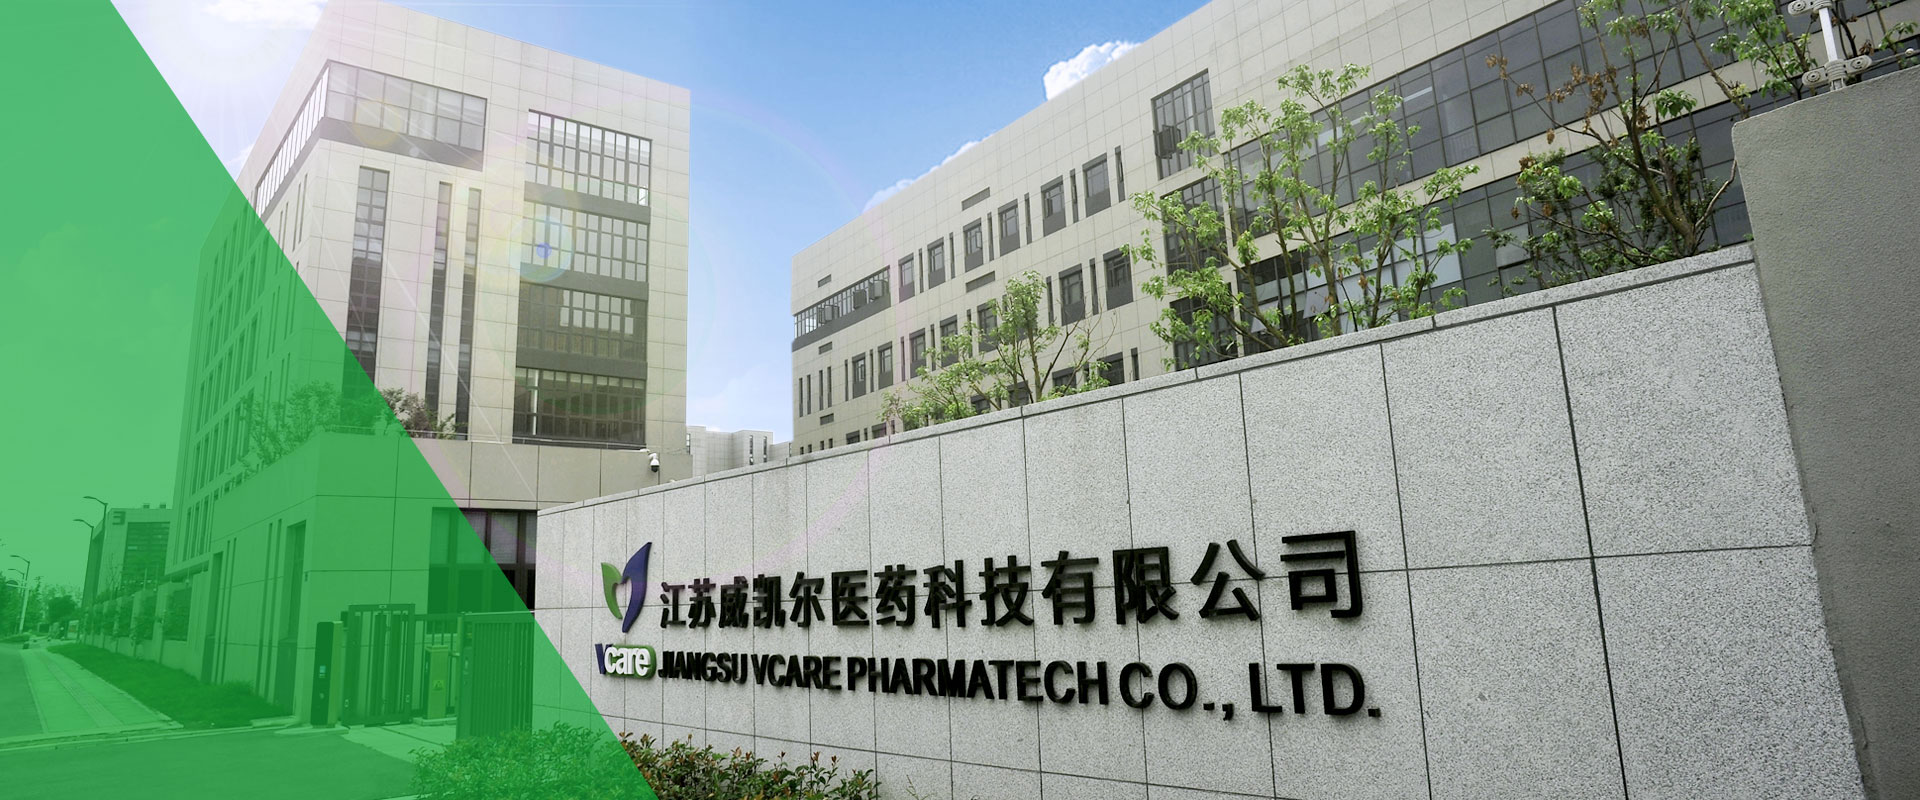 Jiangsu Vcare PharmaTech Co. Ltd.,